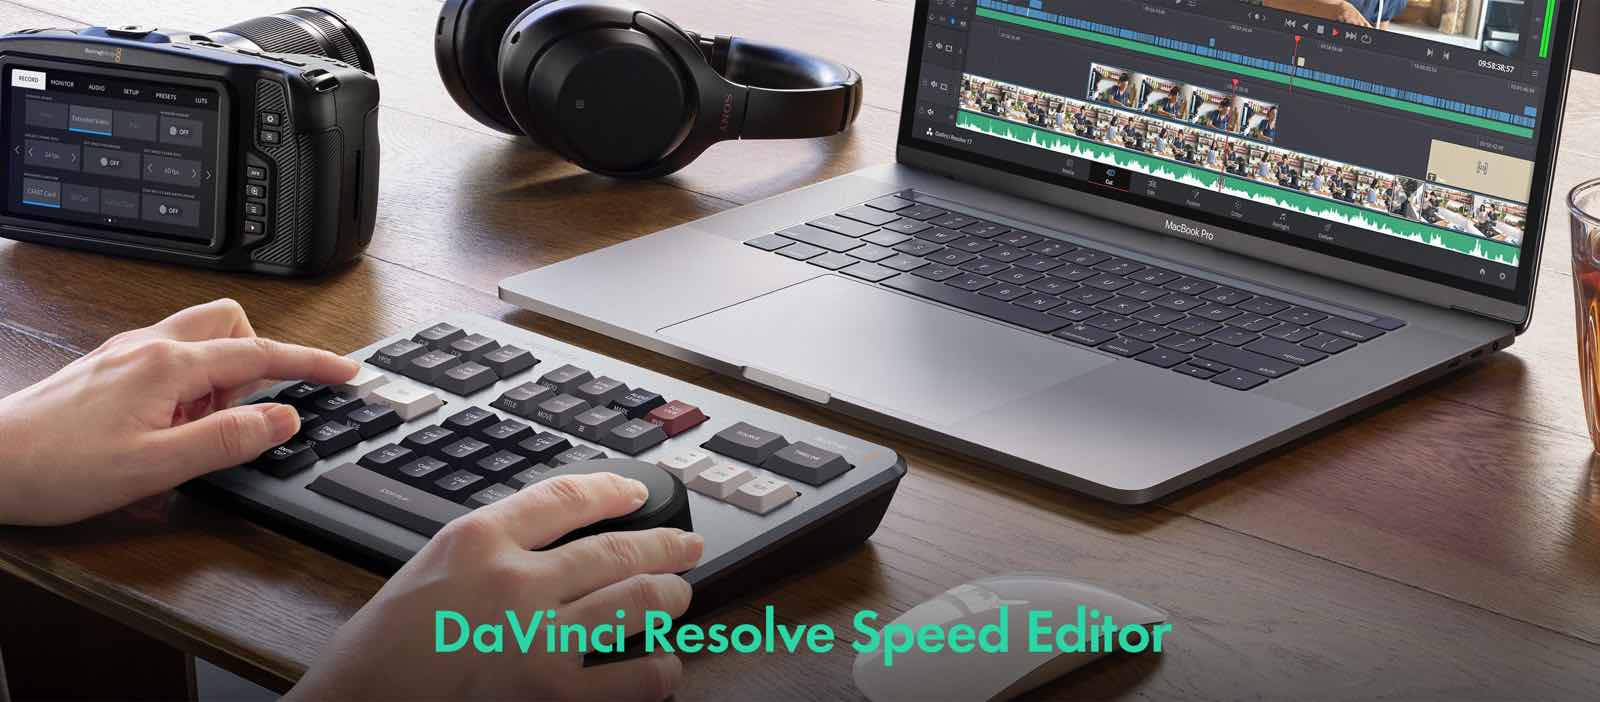 DaVinci Resolve 18.5.0.41 download the last version for mac